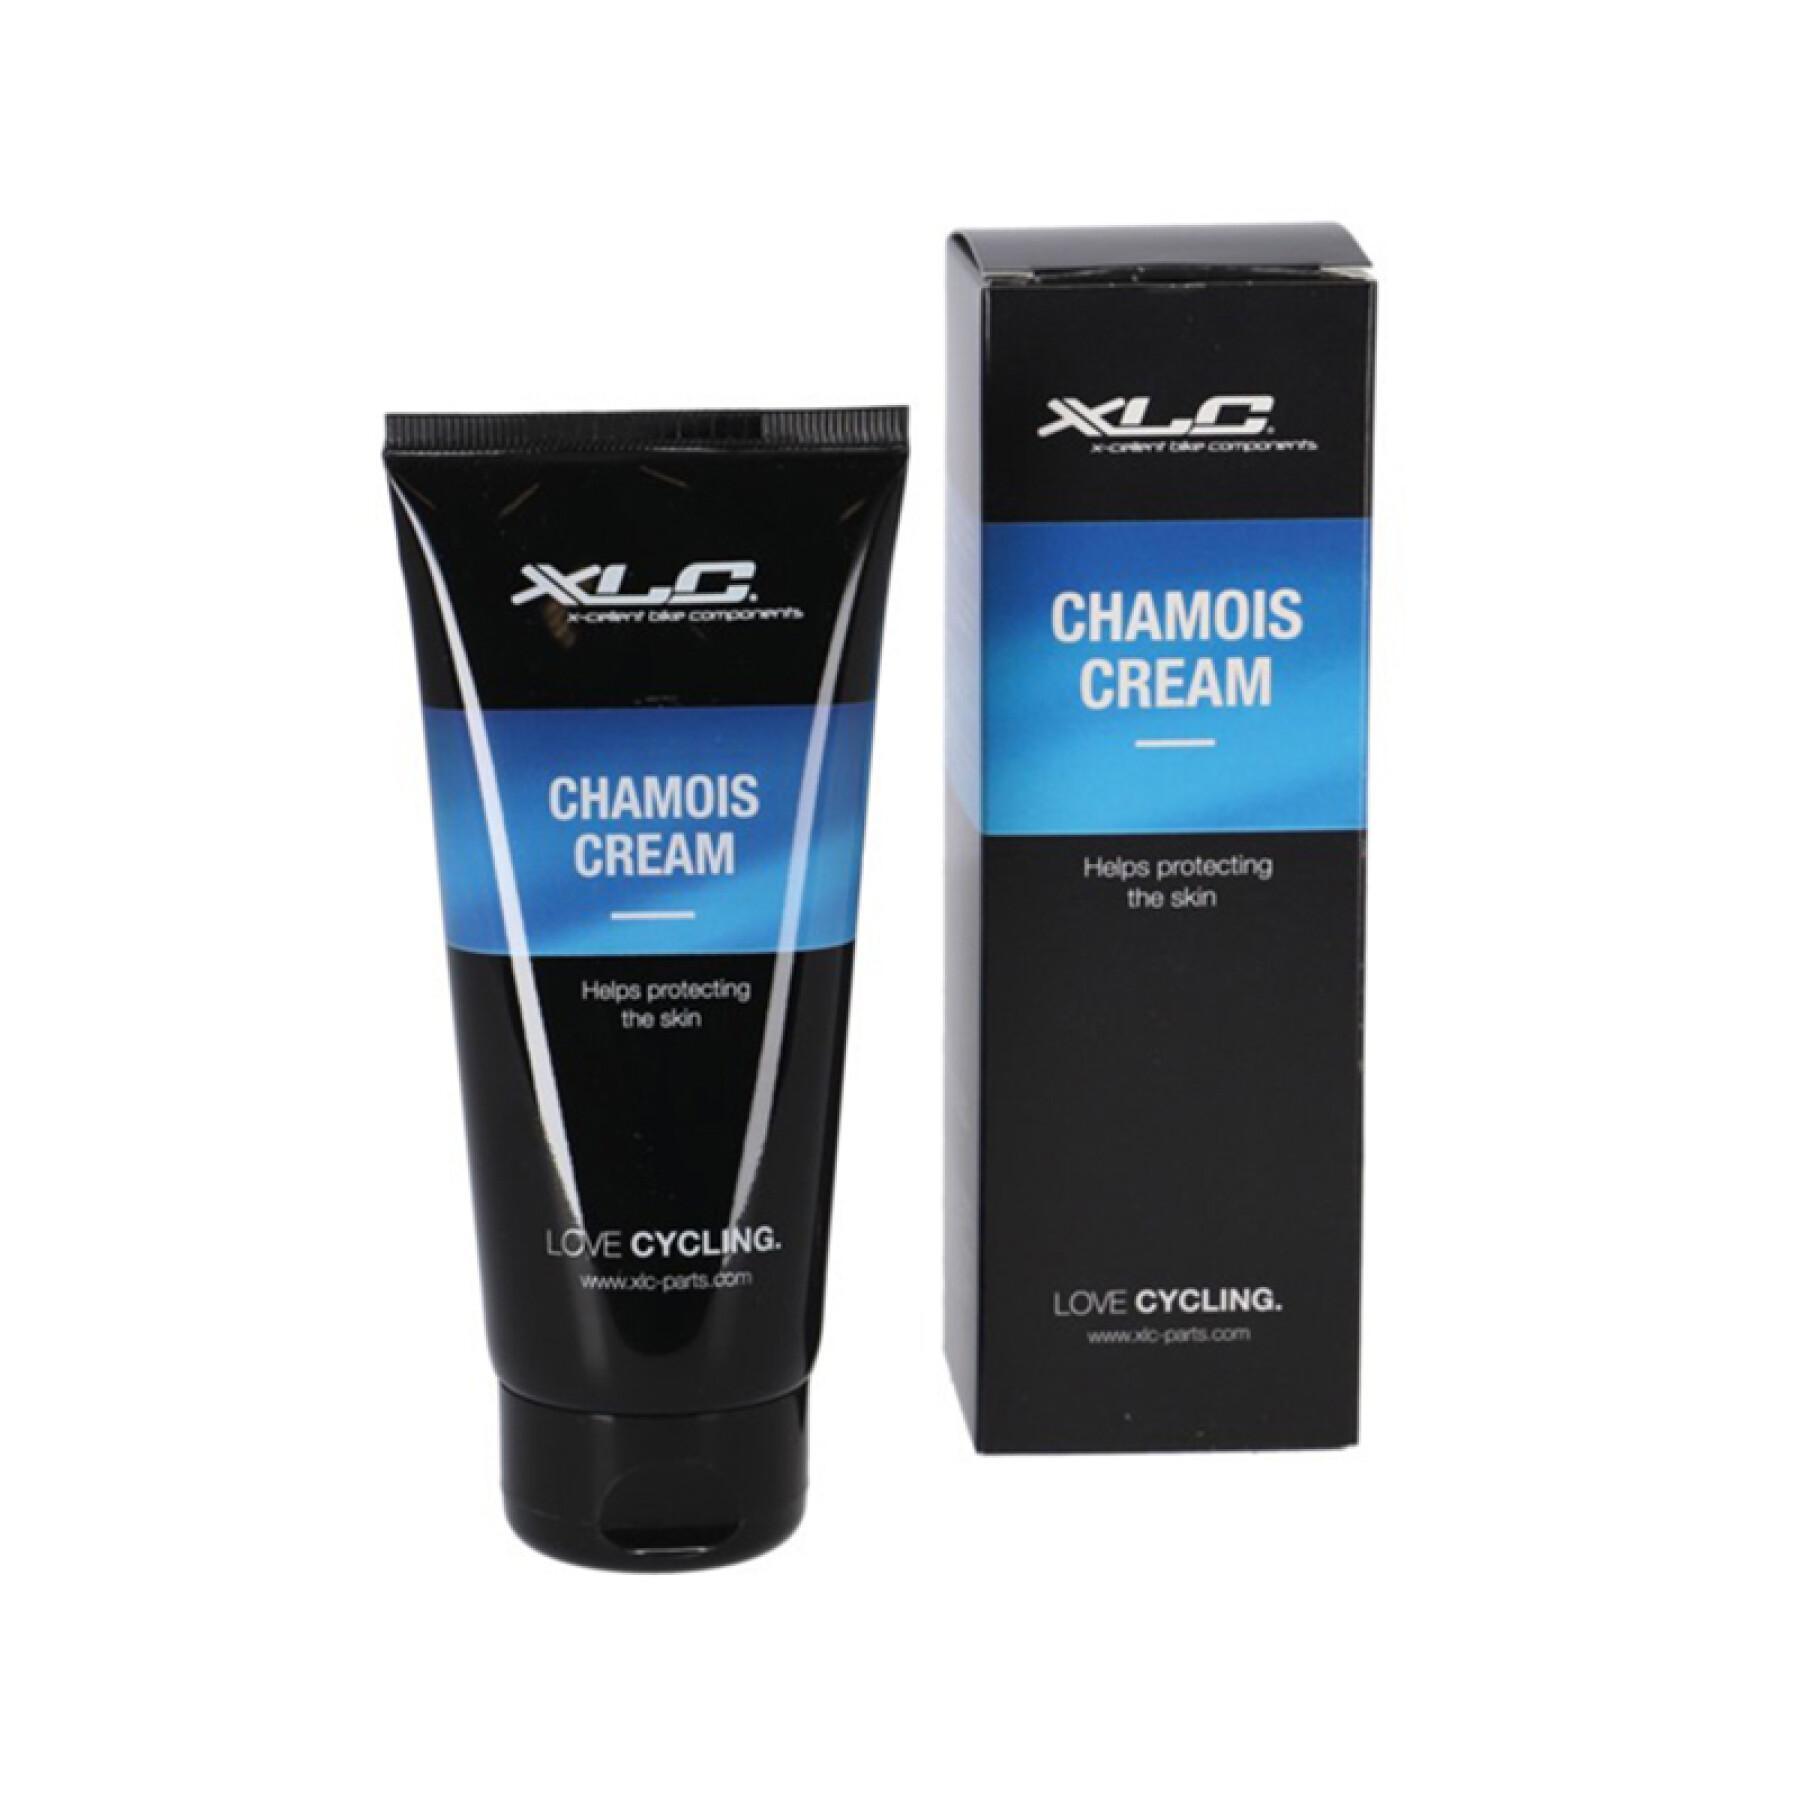 Chamois Cream XLC pm-c01 100 ml